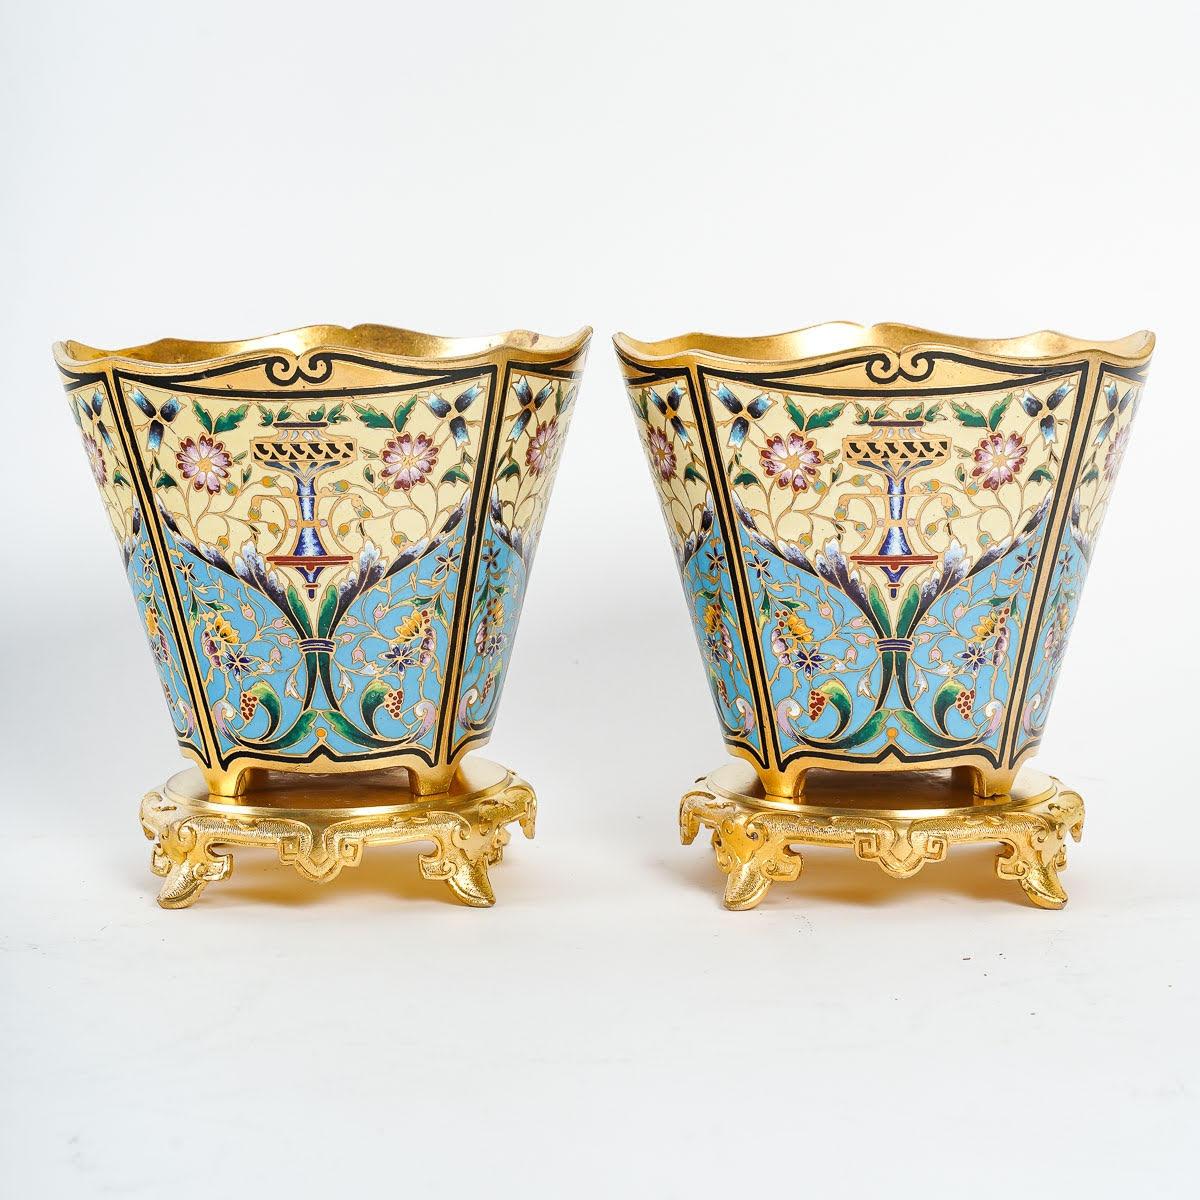 Pair of 19th Century Gilt Bronze and Cloisonné Cups.

Pair of 19th century gilt bronze and cloisonné bowls, Napoleon III period.

Dimensions: h: 13cm, d: 13cm